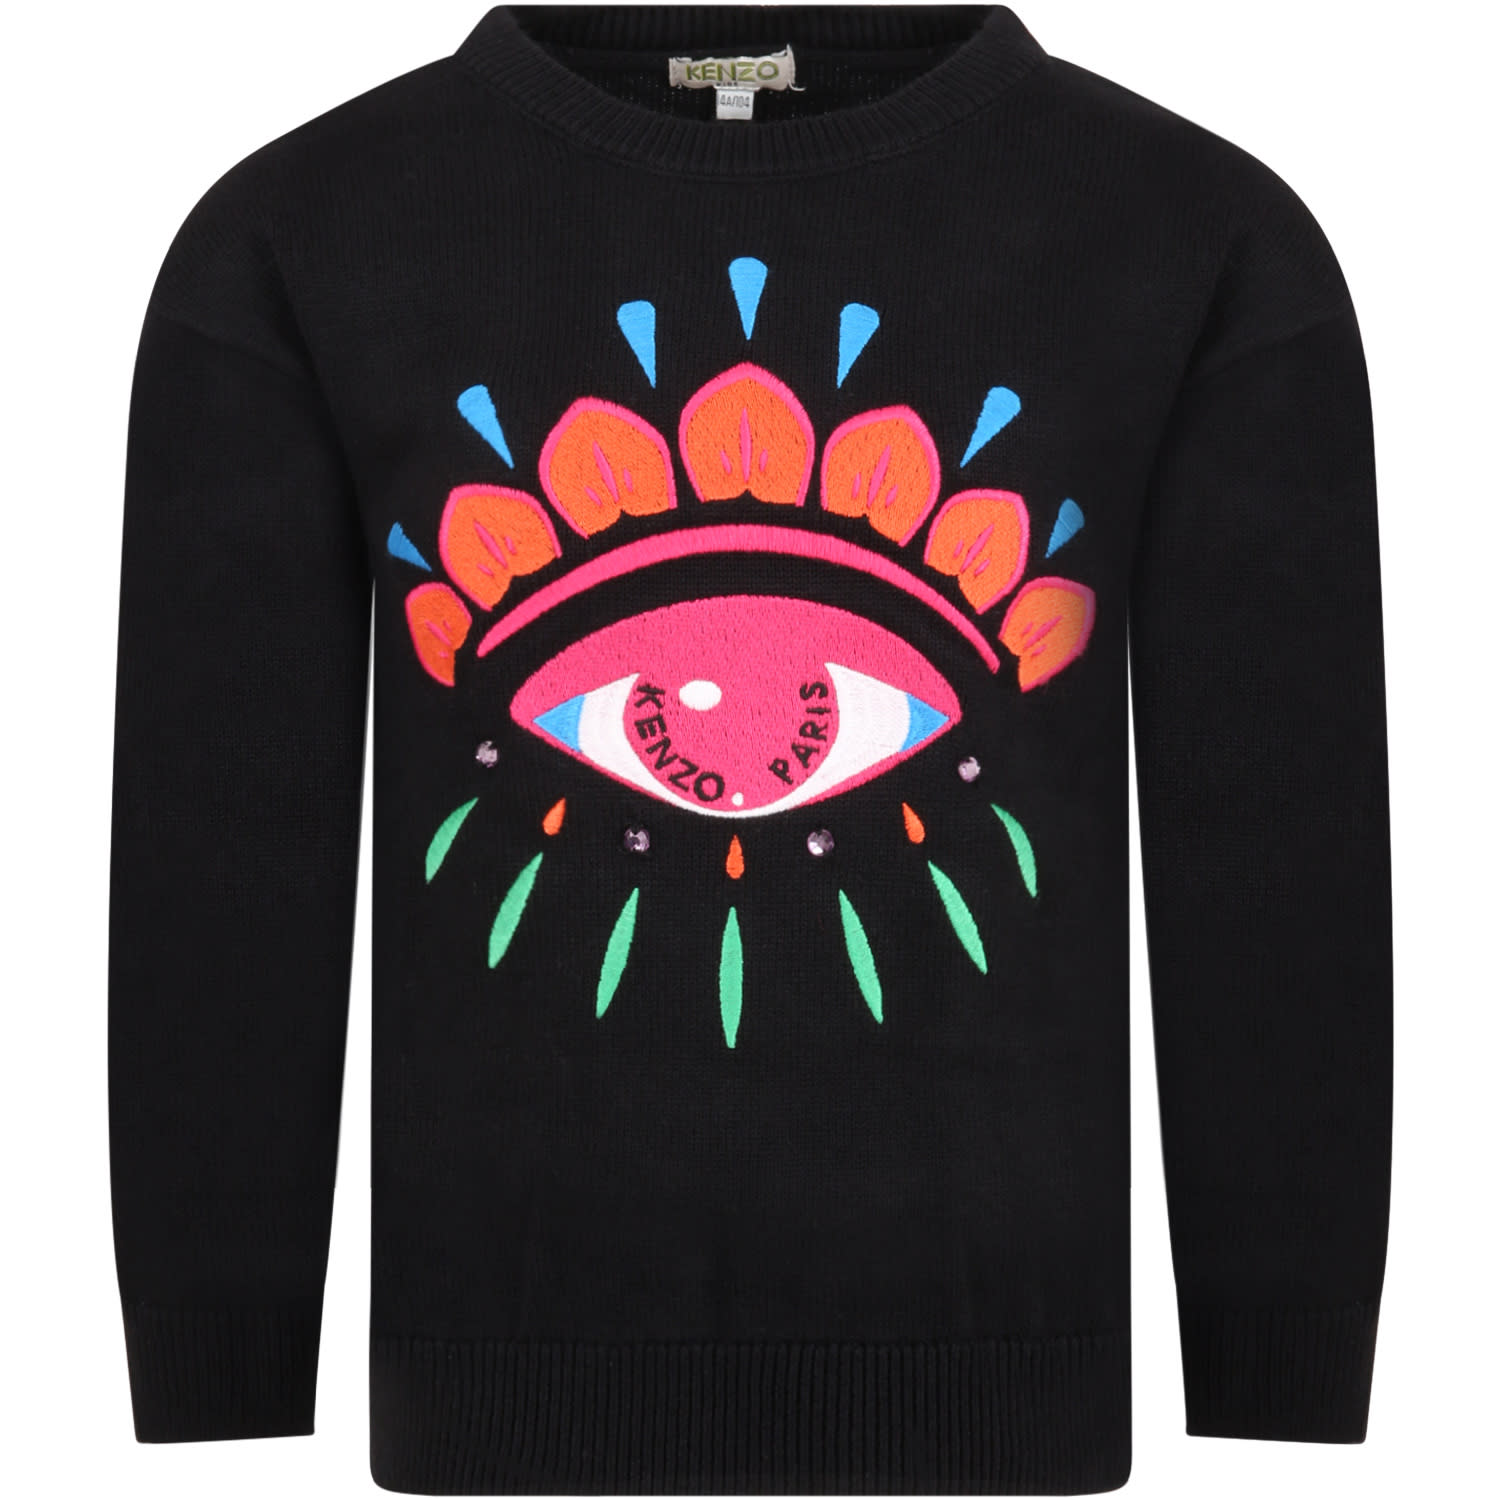 Kenzo Kids Black Sweater For Girl With Iconic Eye